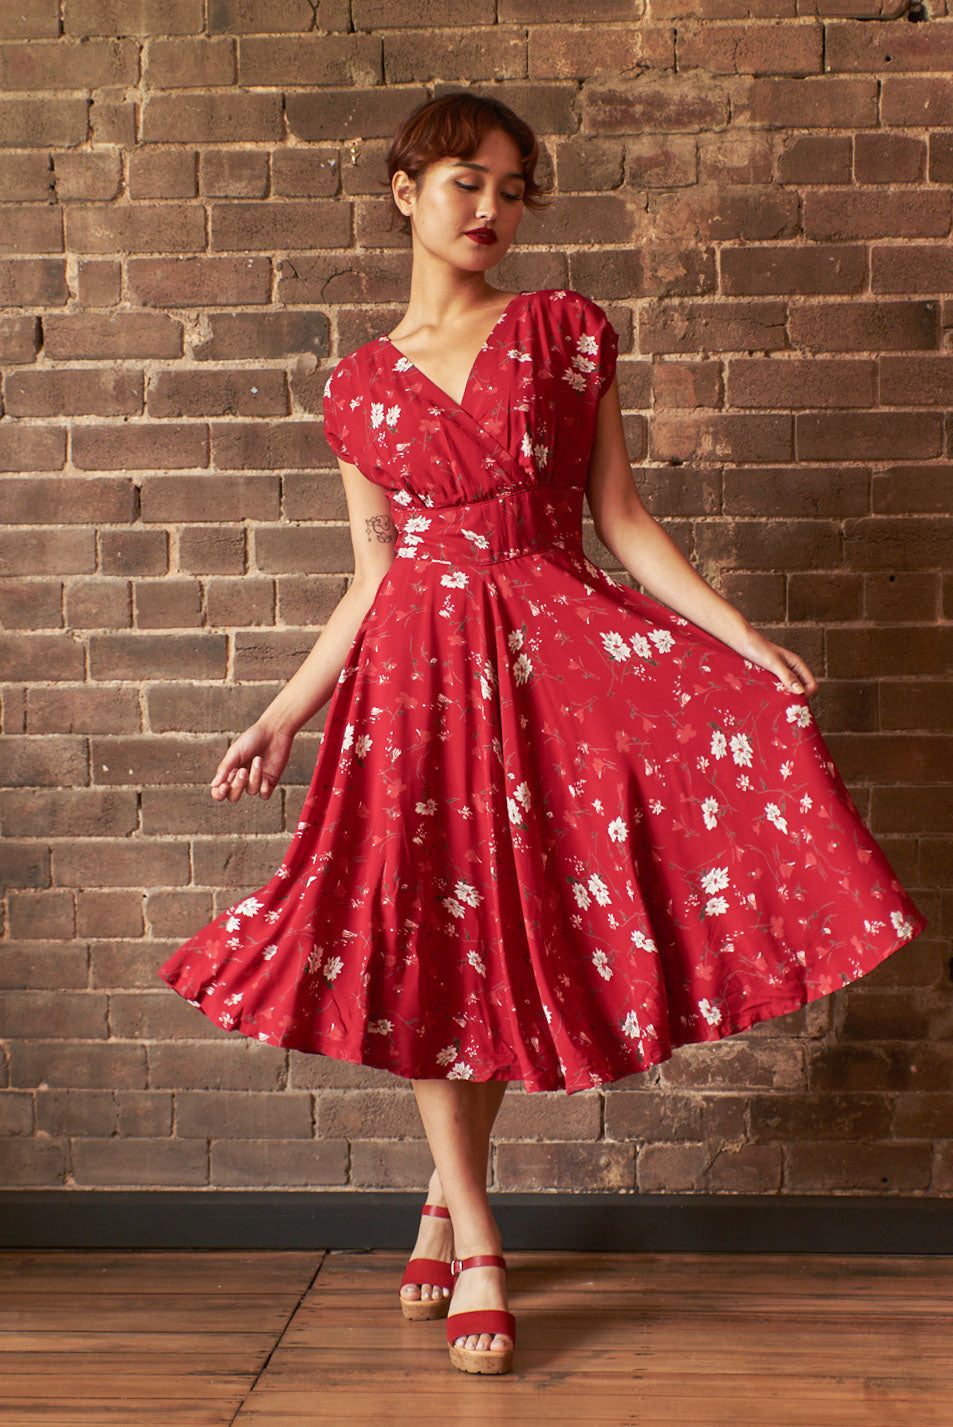 Viola Red & Cream Daisy Dress